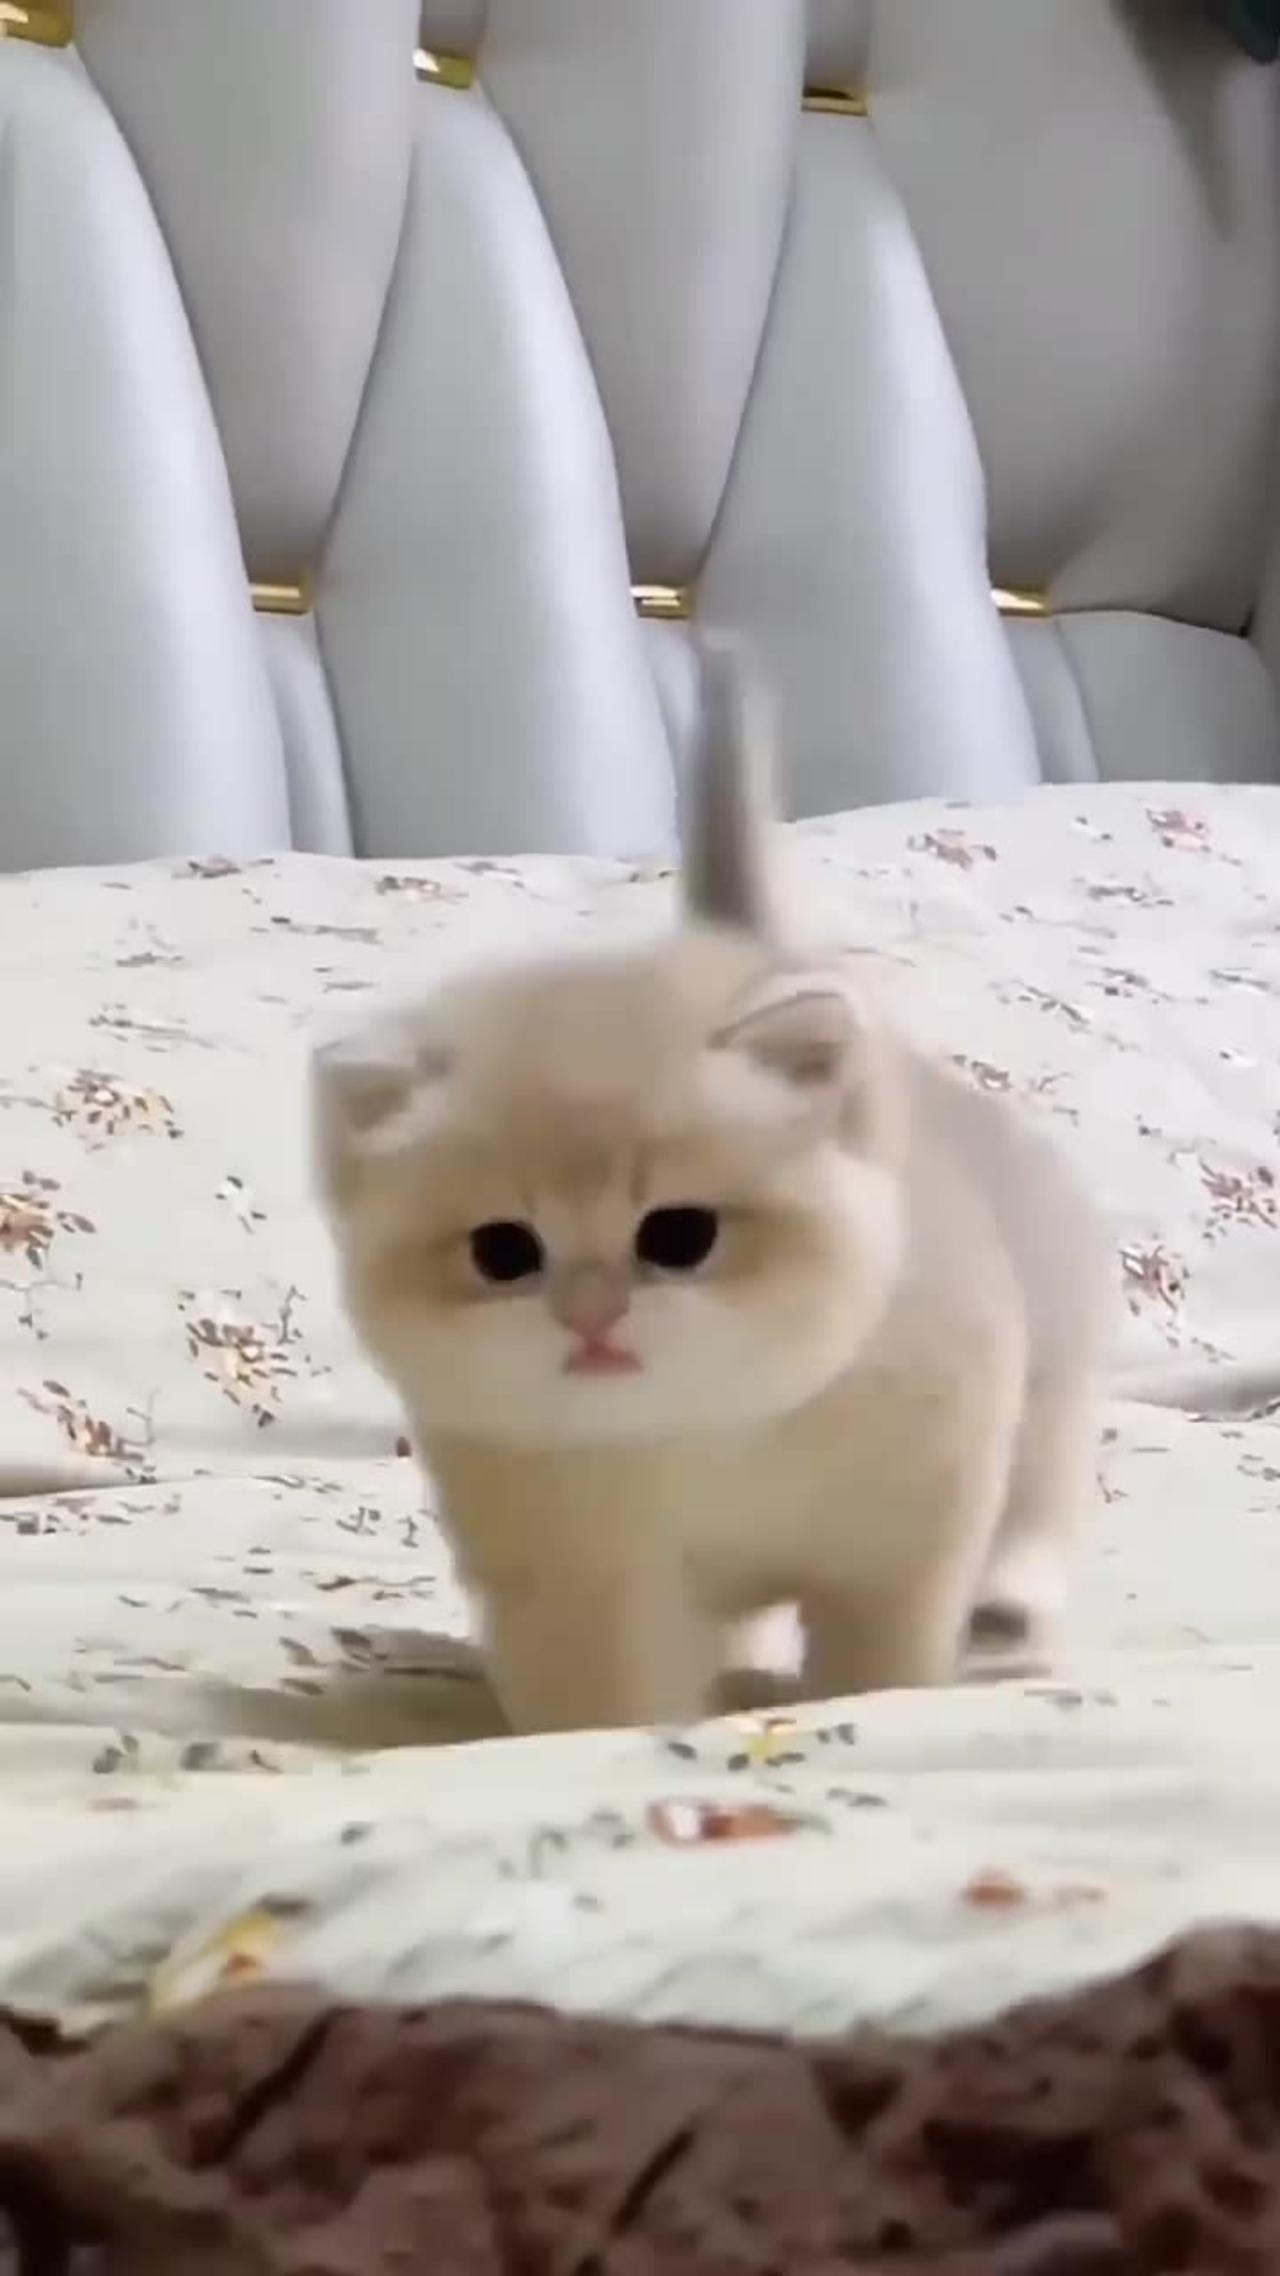 Cute baby kittens.